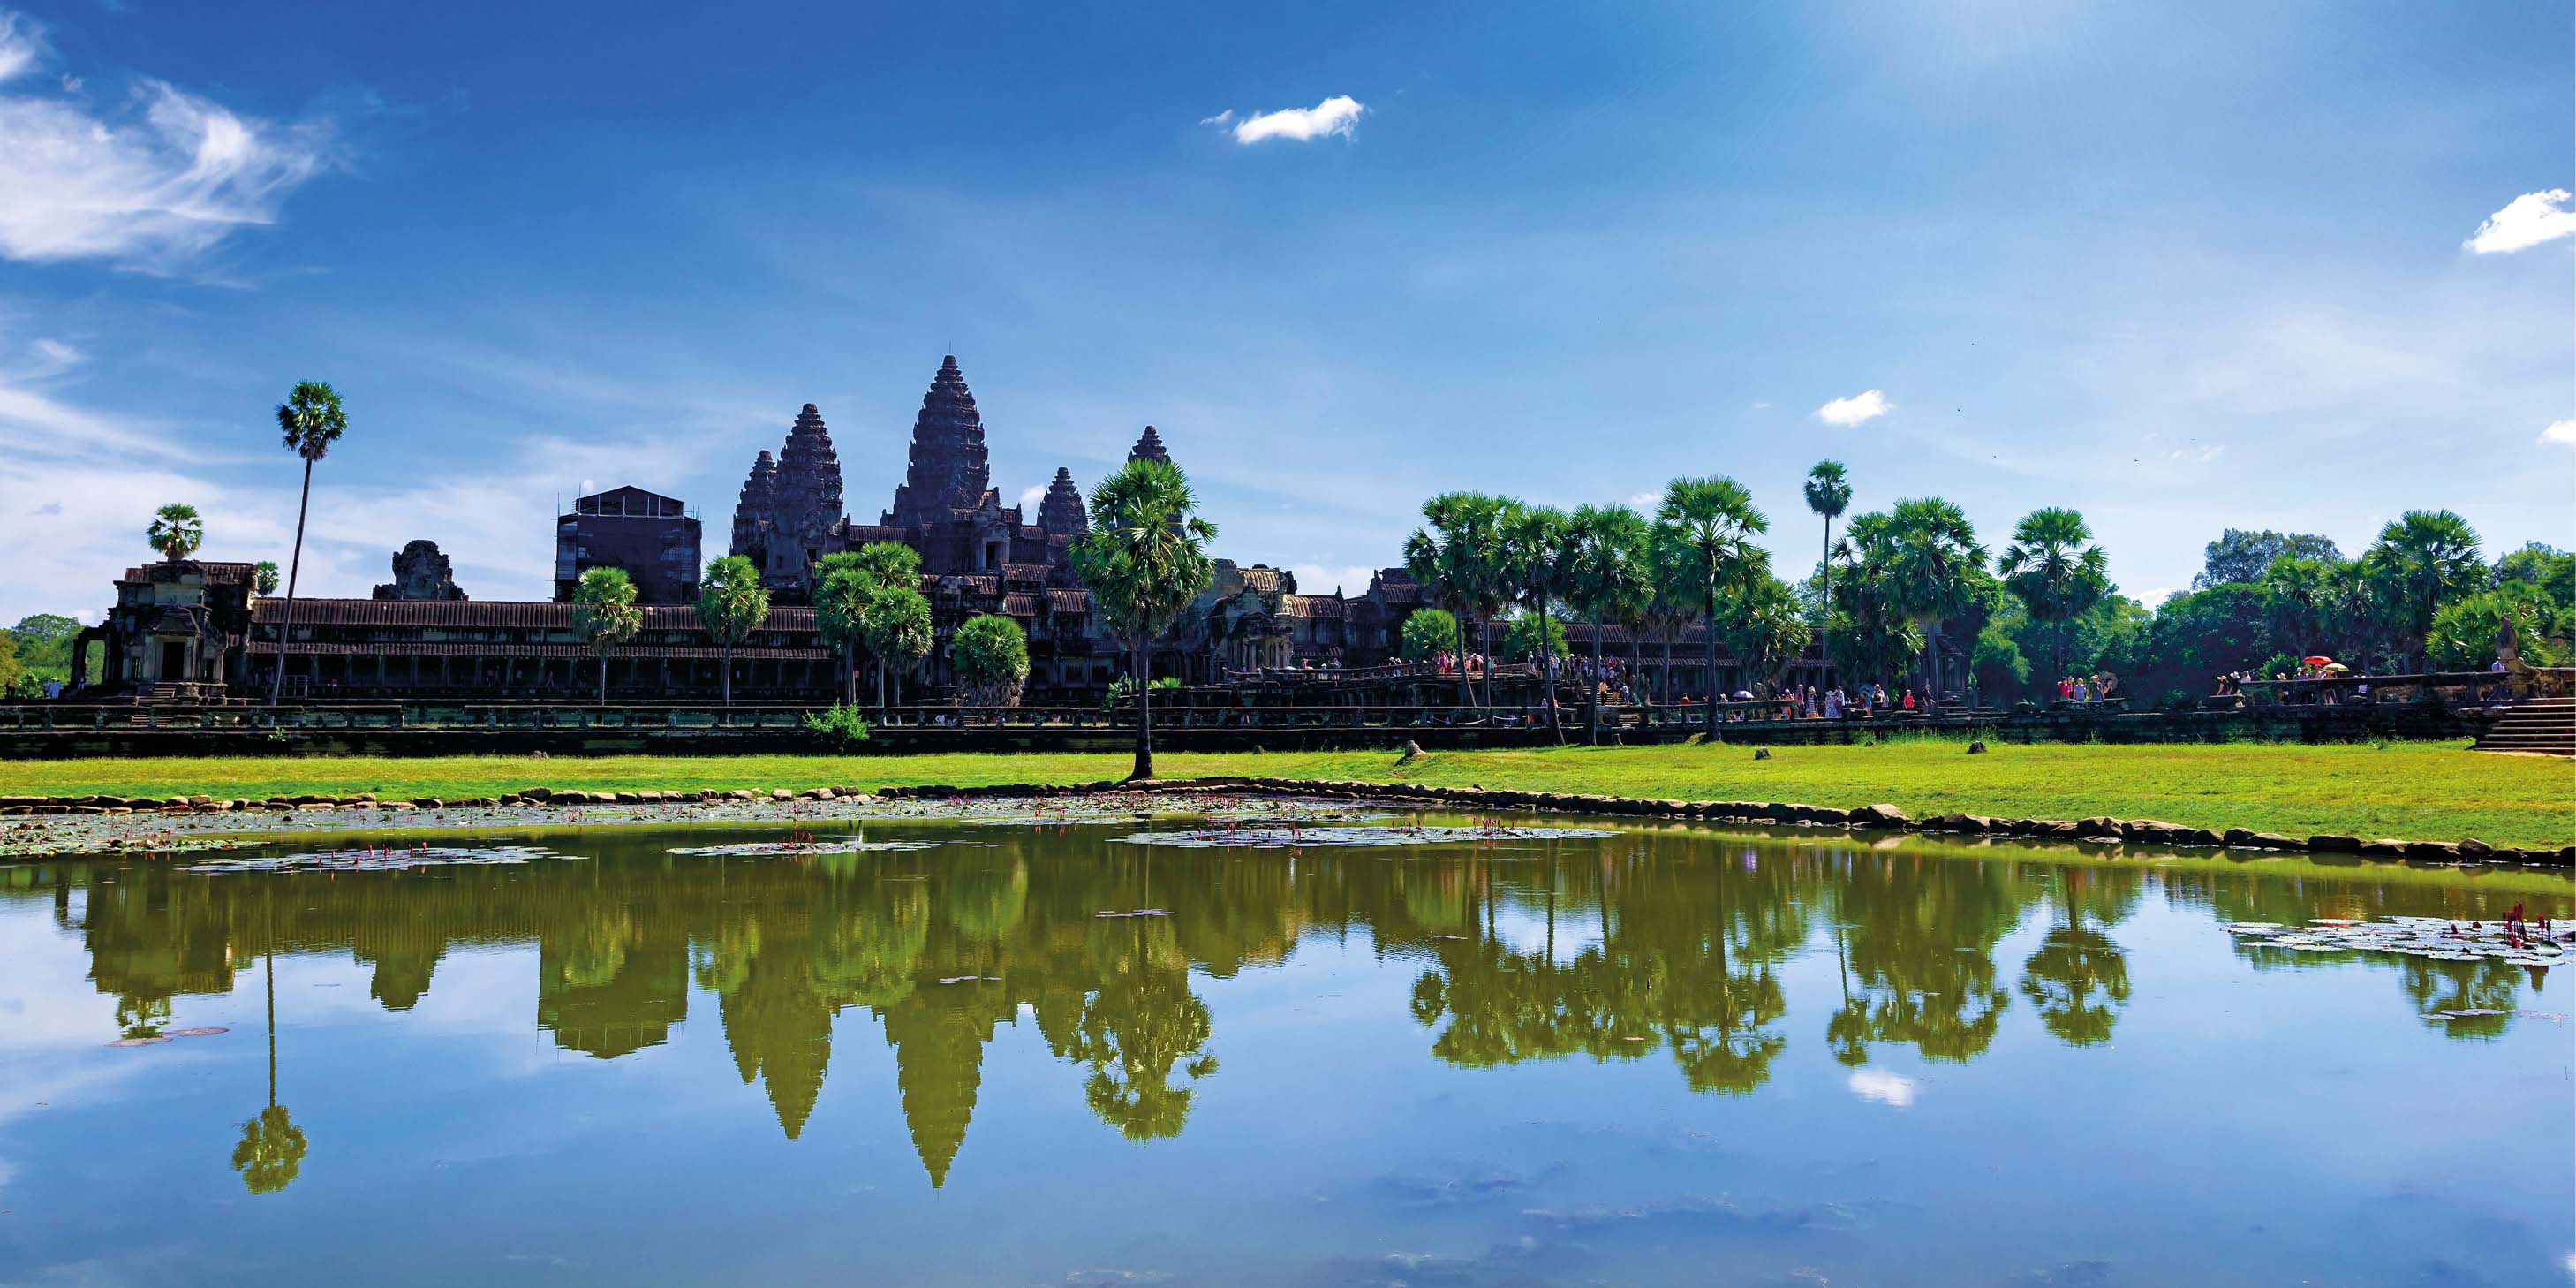 The waters and grassland around Angkor Wat, Cambodia